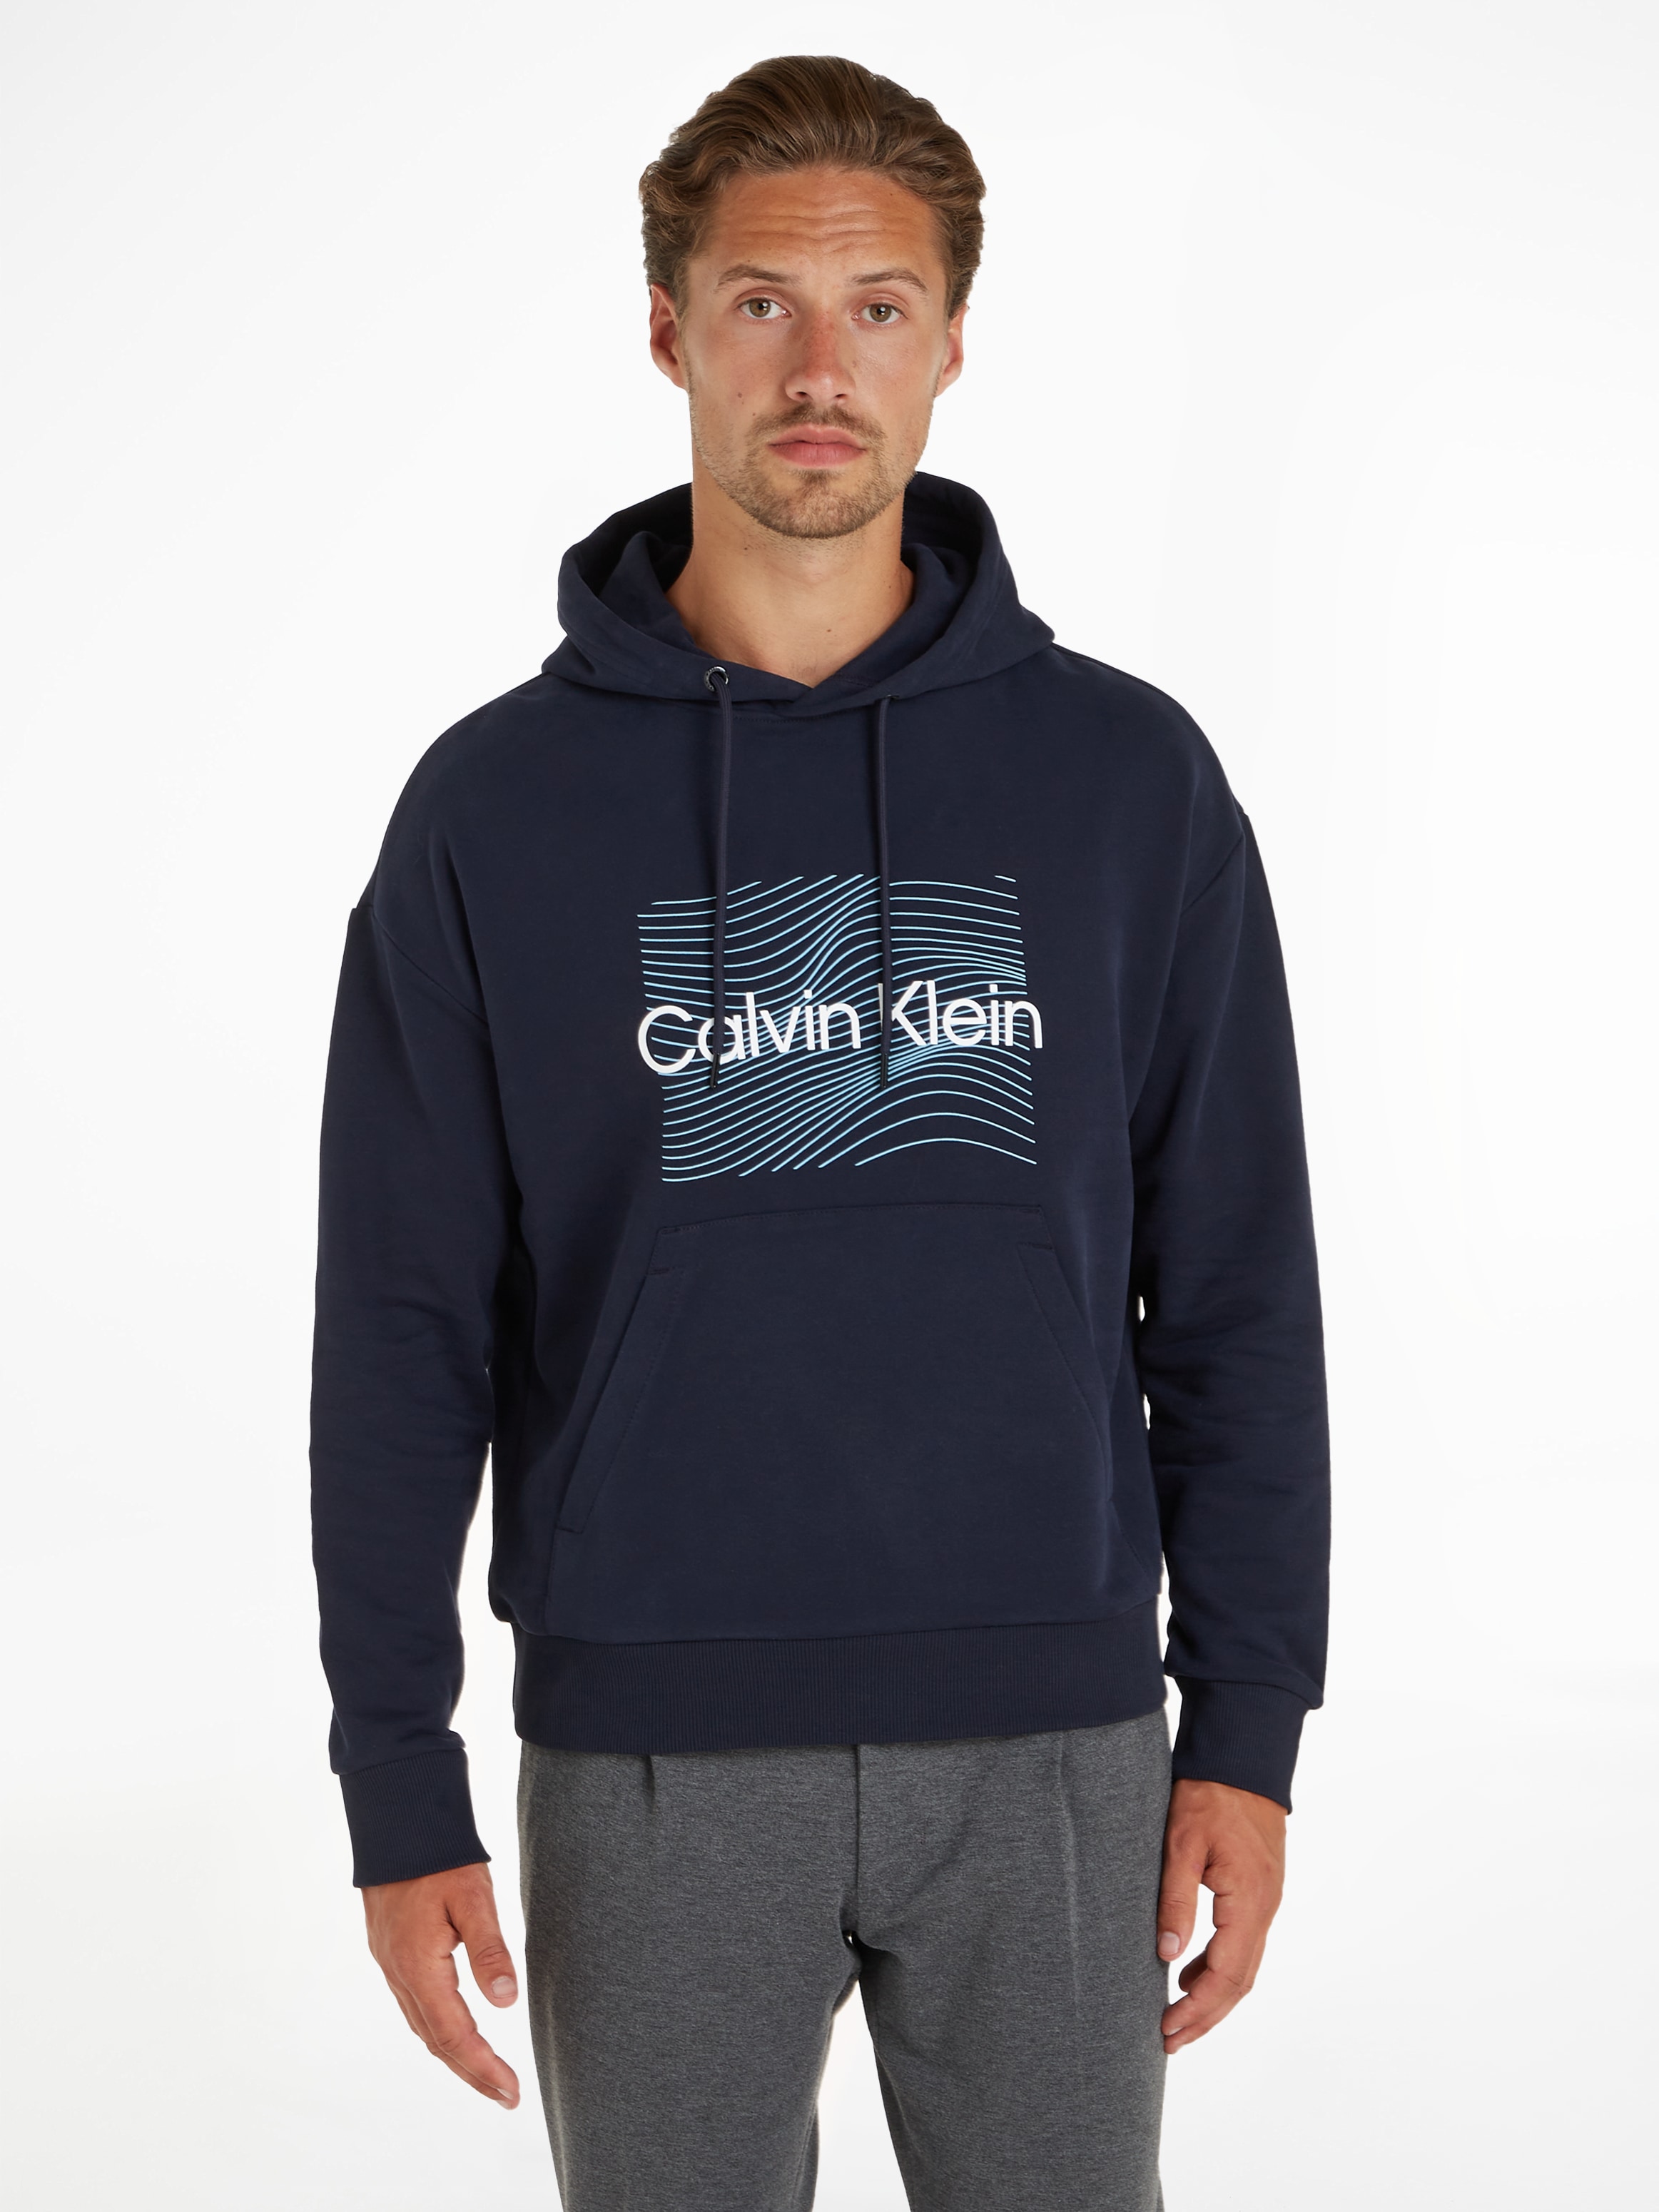 Sweatshirt OTTO online shoppen bei RAGMAN